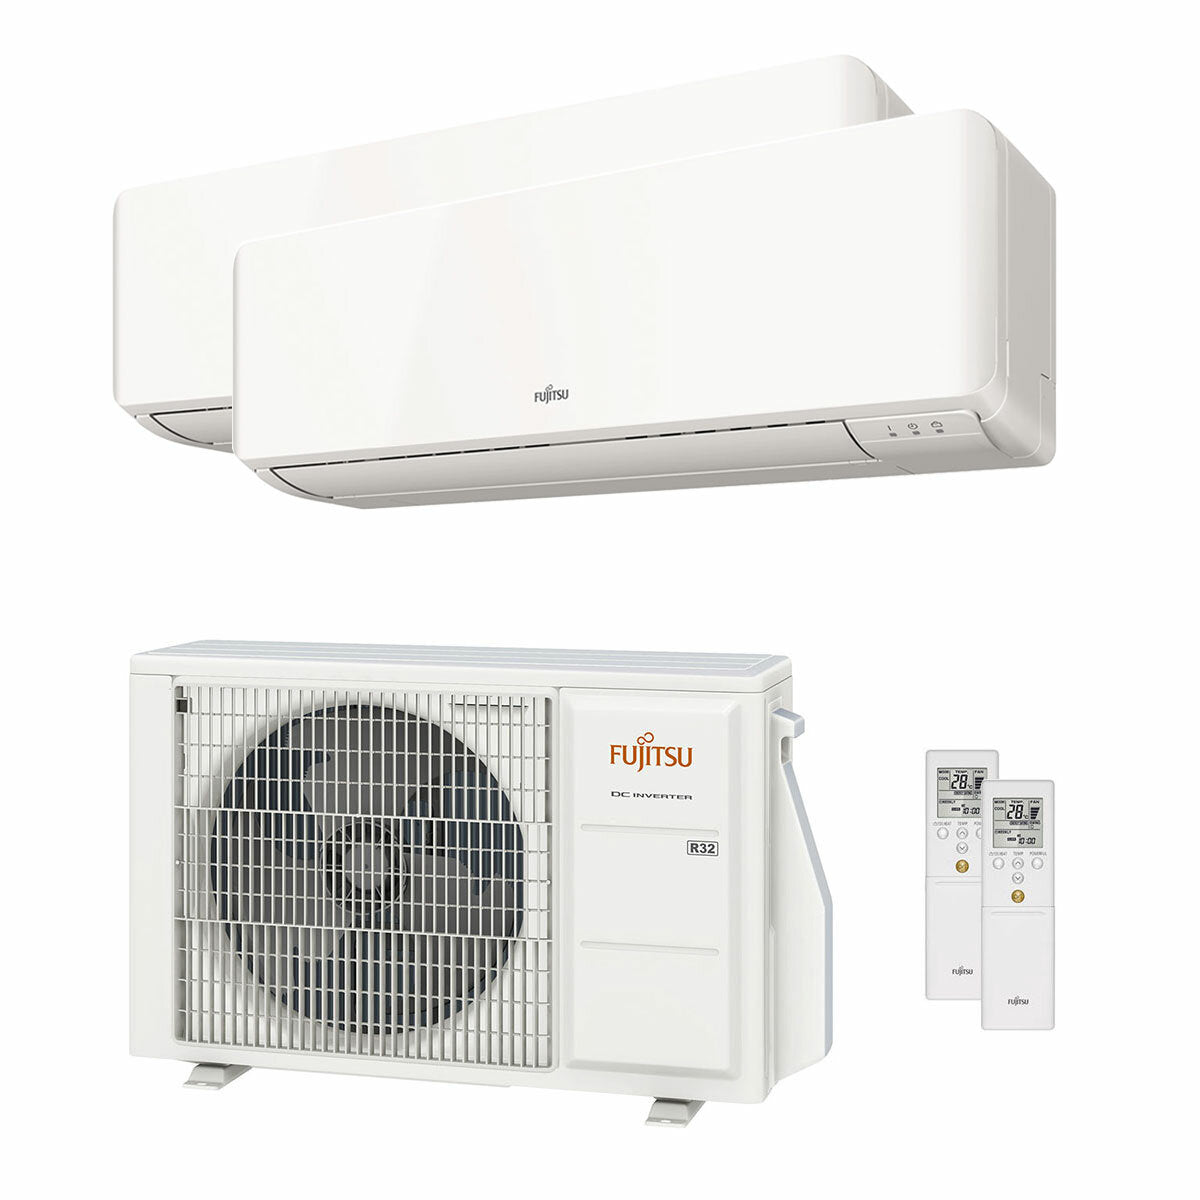 Fujitsu air conditioner KM WiFi Series dual split 7000+7000 BTU inverter A+++ external unit 4 kW